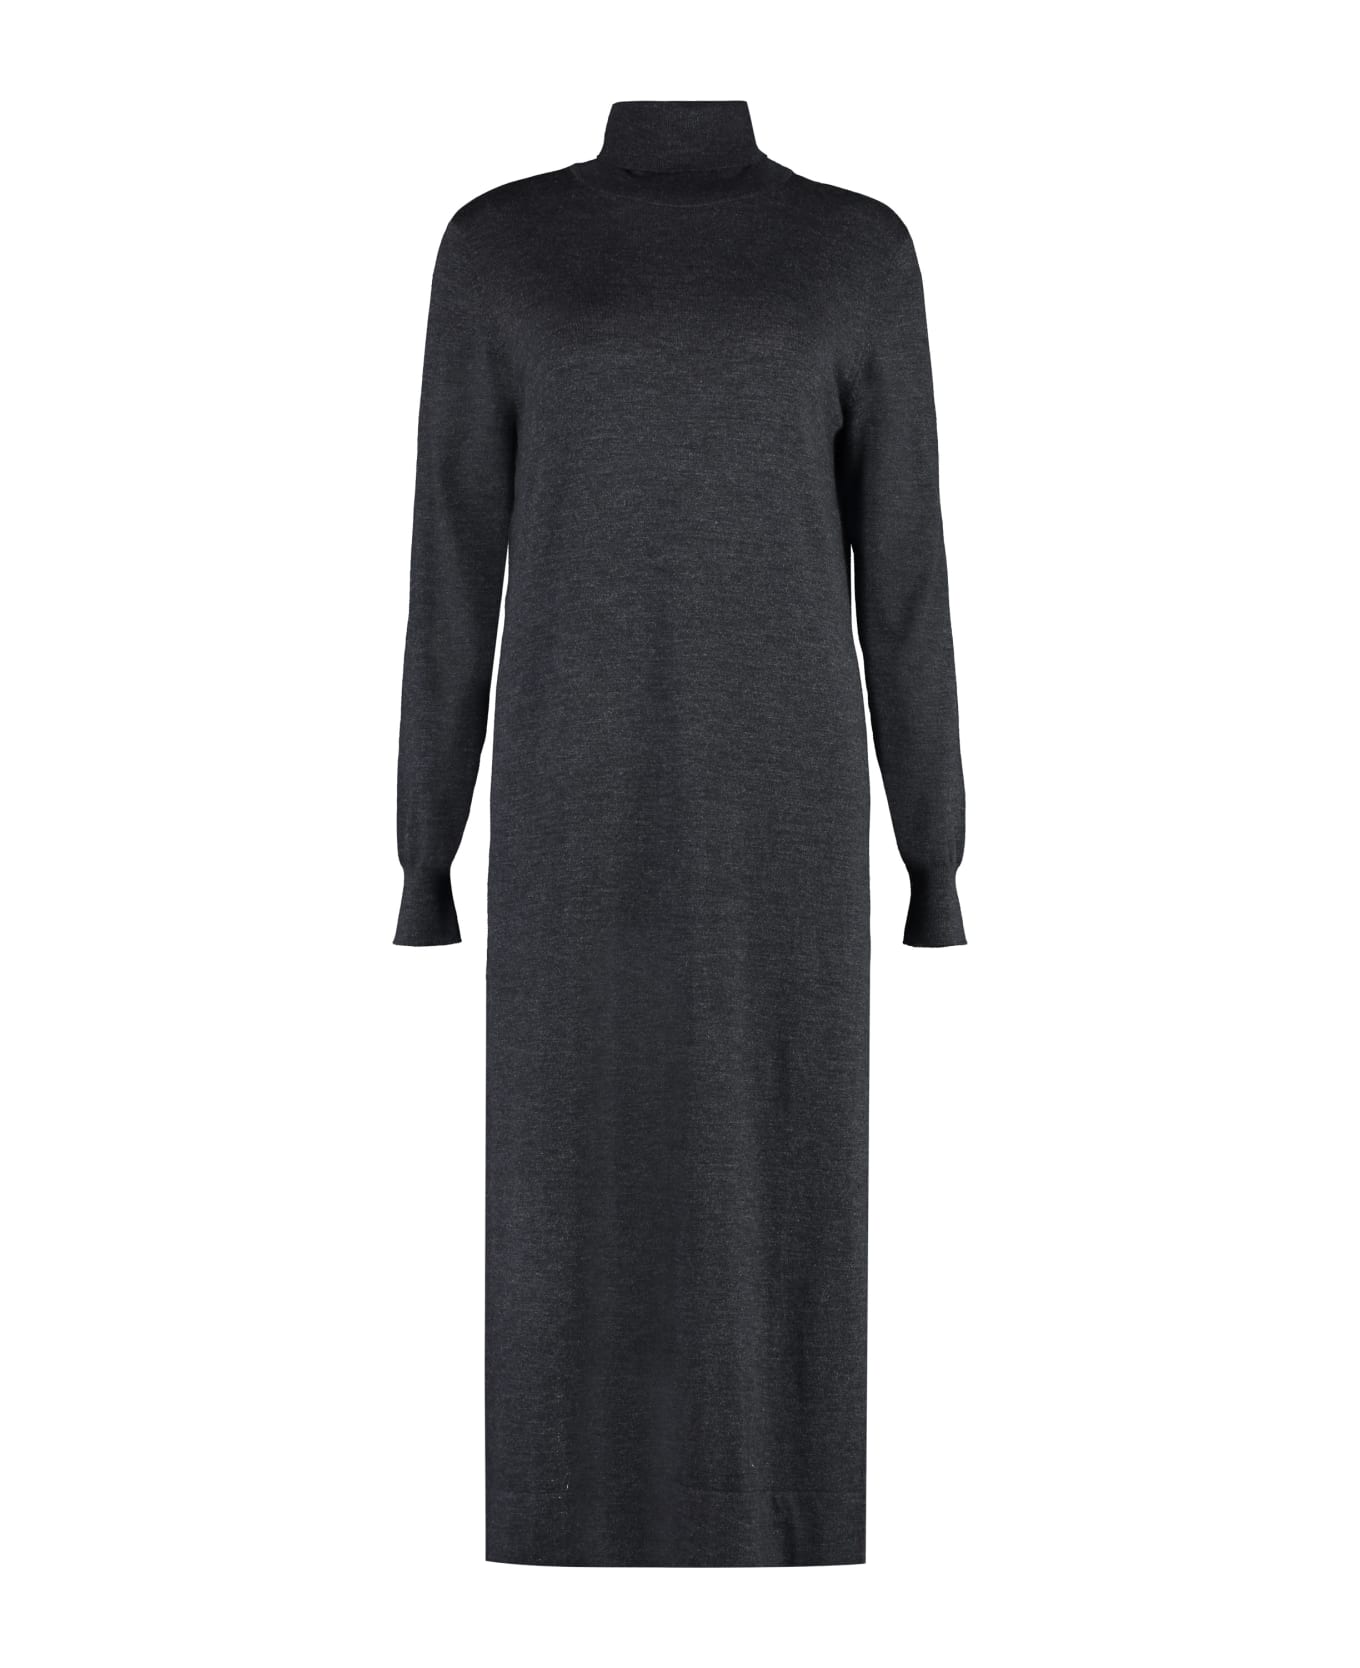 Parosh Knitted Turtleneck Dress - grey